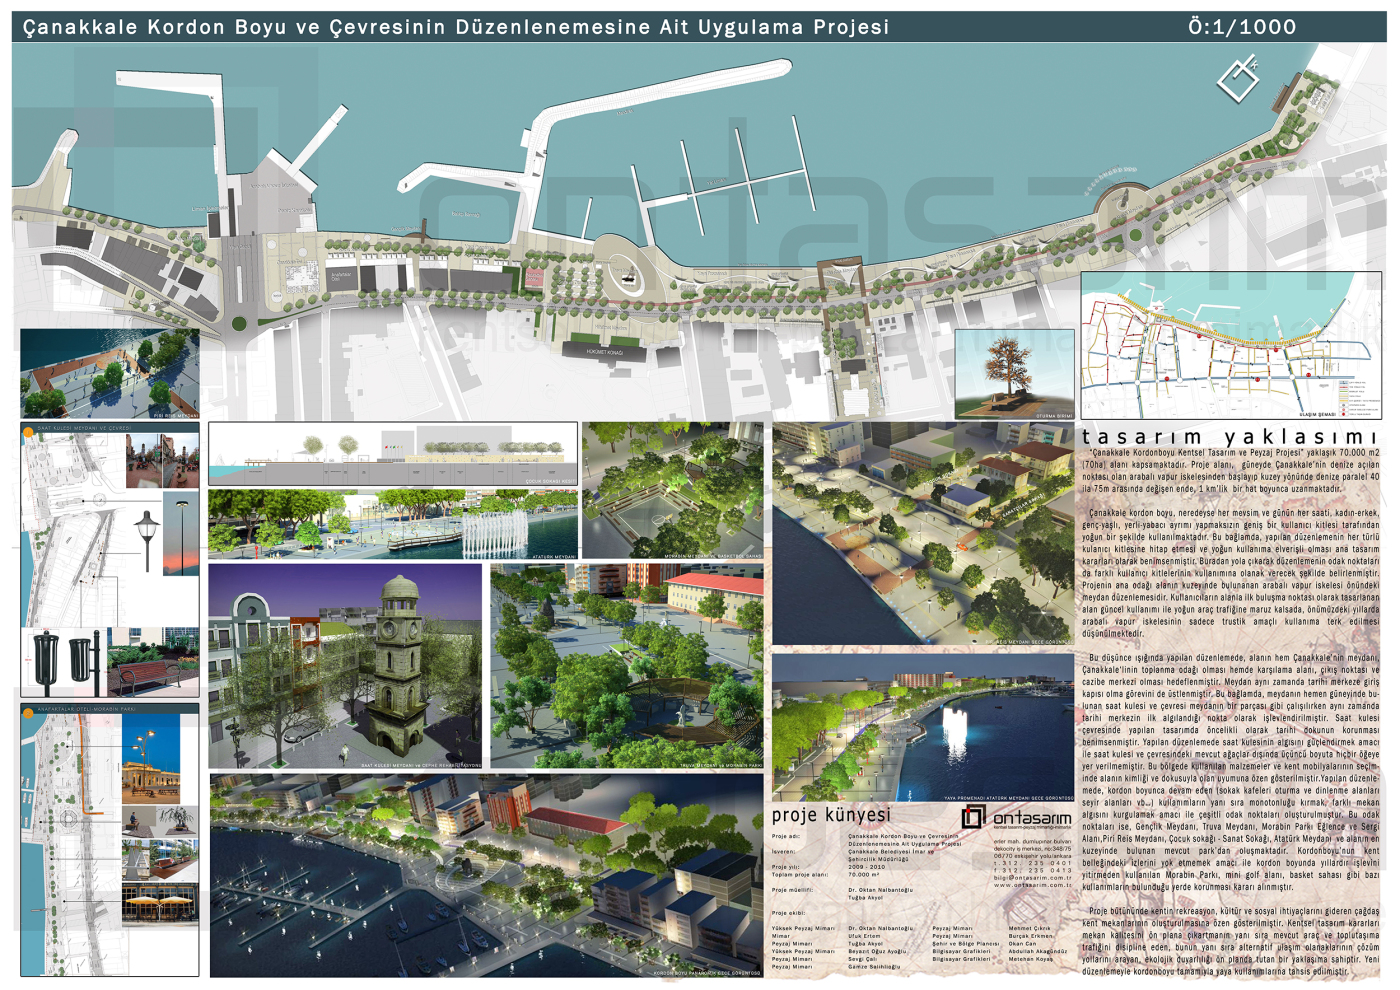 Canakkale Kordonboyu and Neighborhood Urban Design and Landscape Project Working Plans/Details